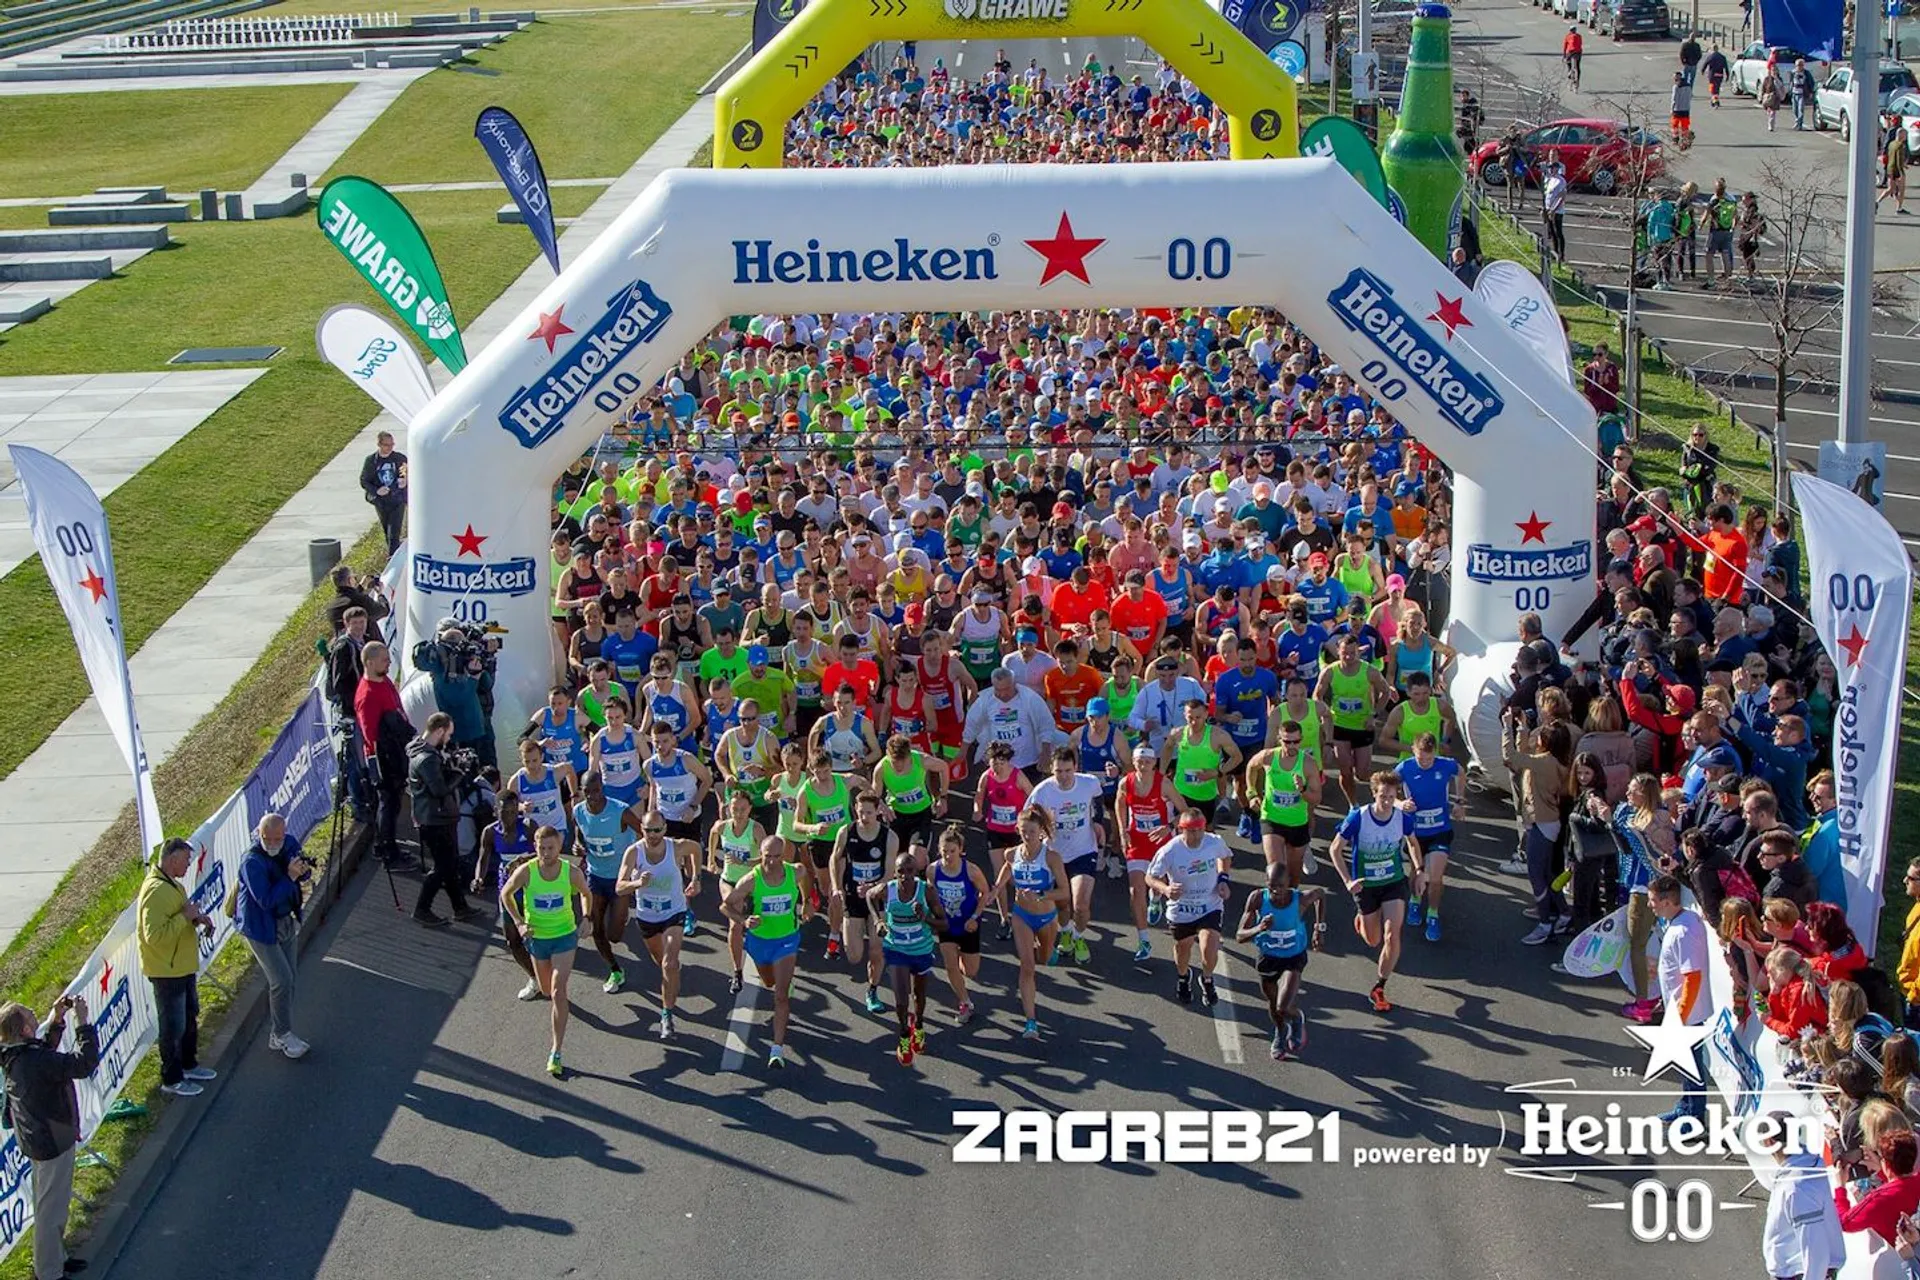 ZAGREB21 – Zagreb Spring Half Marathon powered by heineken 0.0